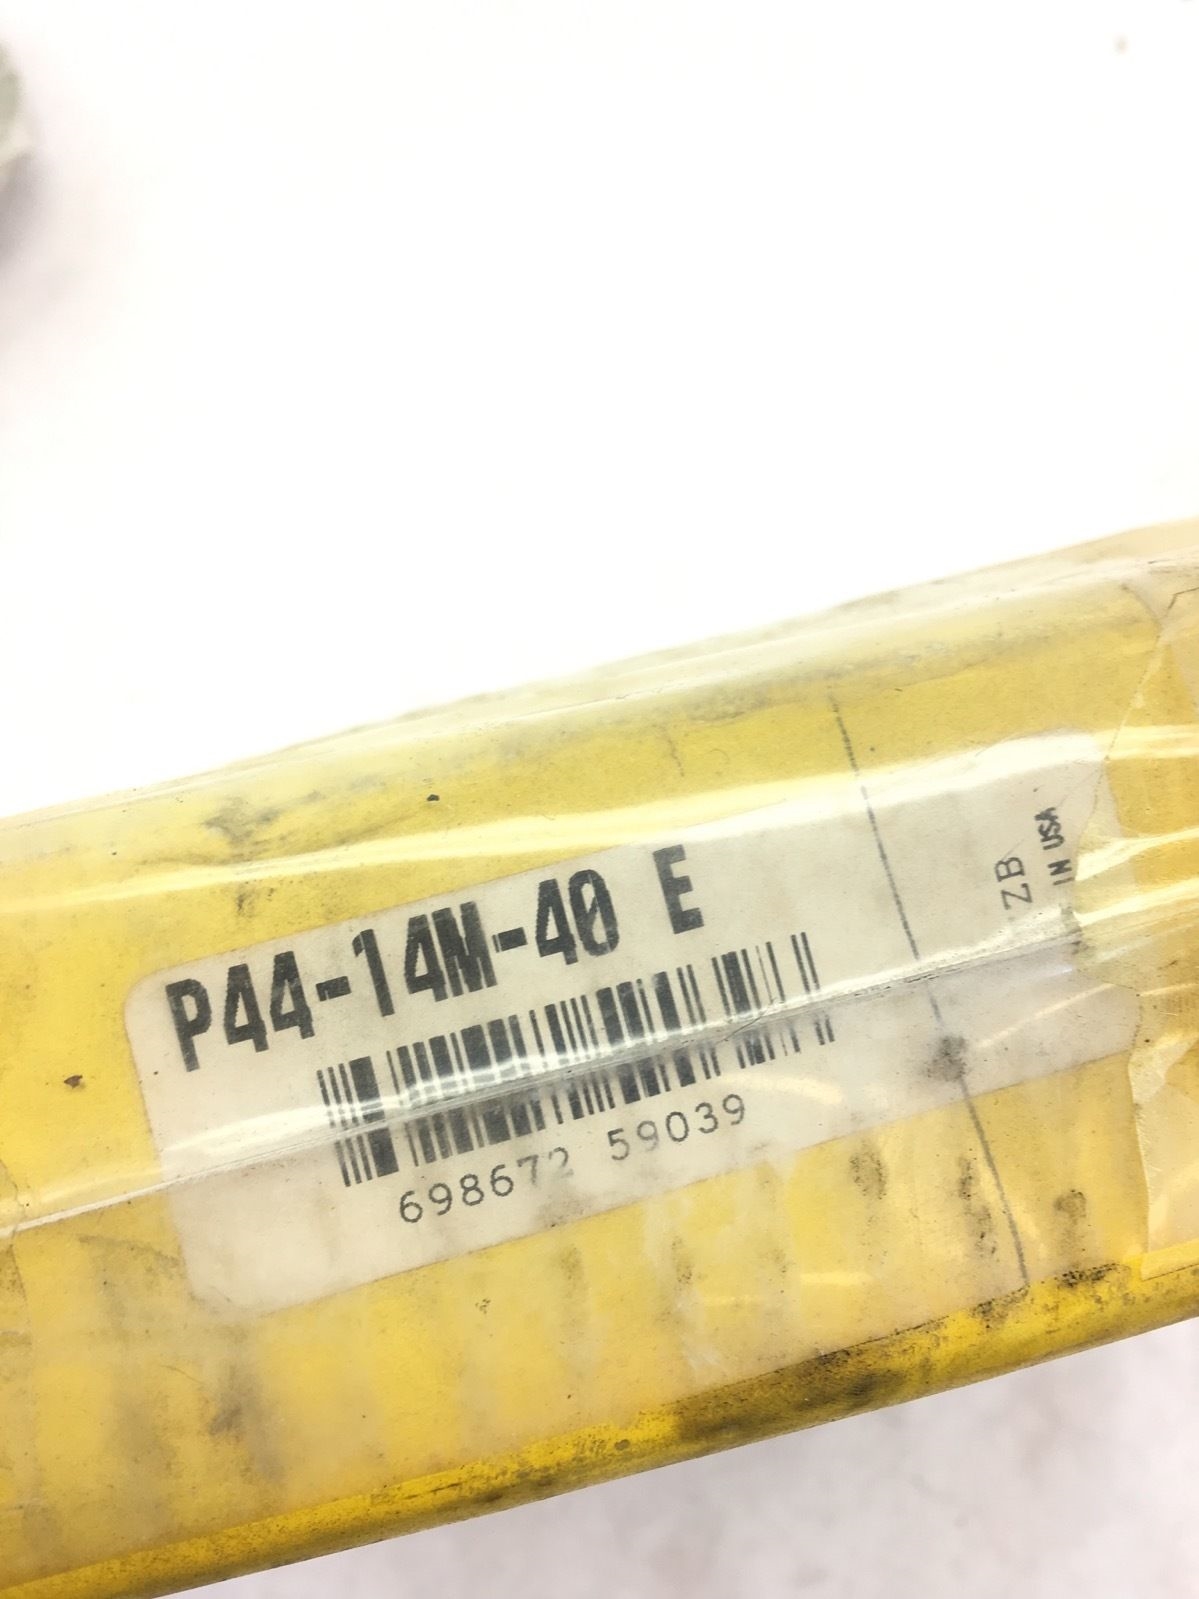 NEW IN BOX TB WOODS P44-14M-40-E HTD SPROCKET QD TIMING PULLEY 44 TEETH, (B385) 2